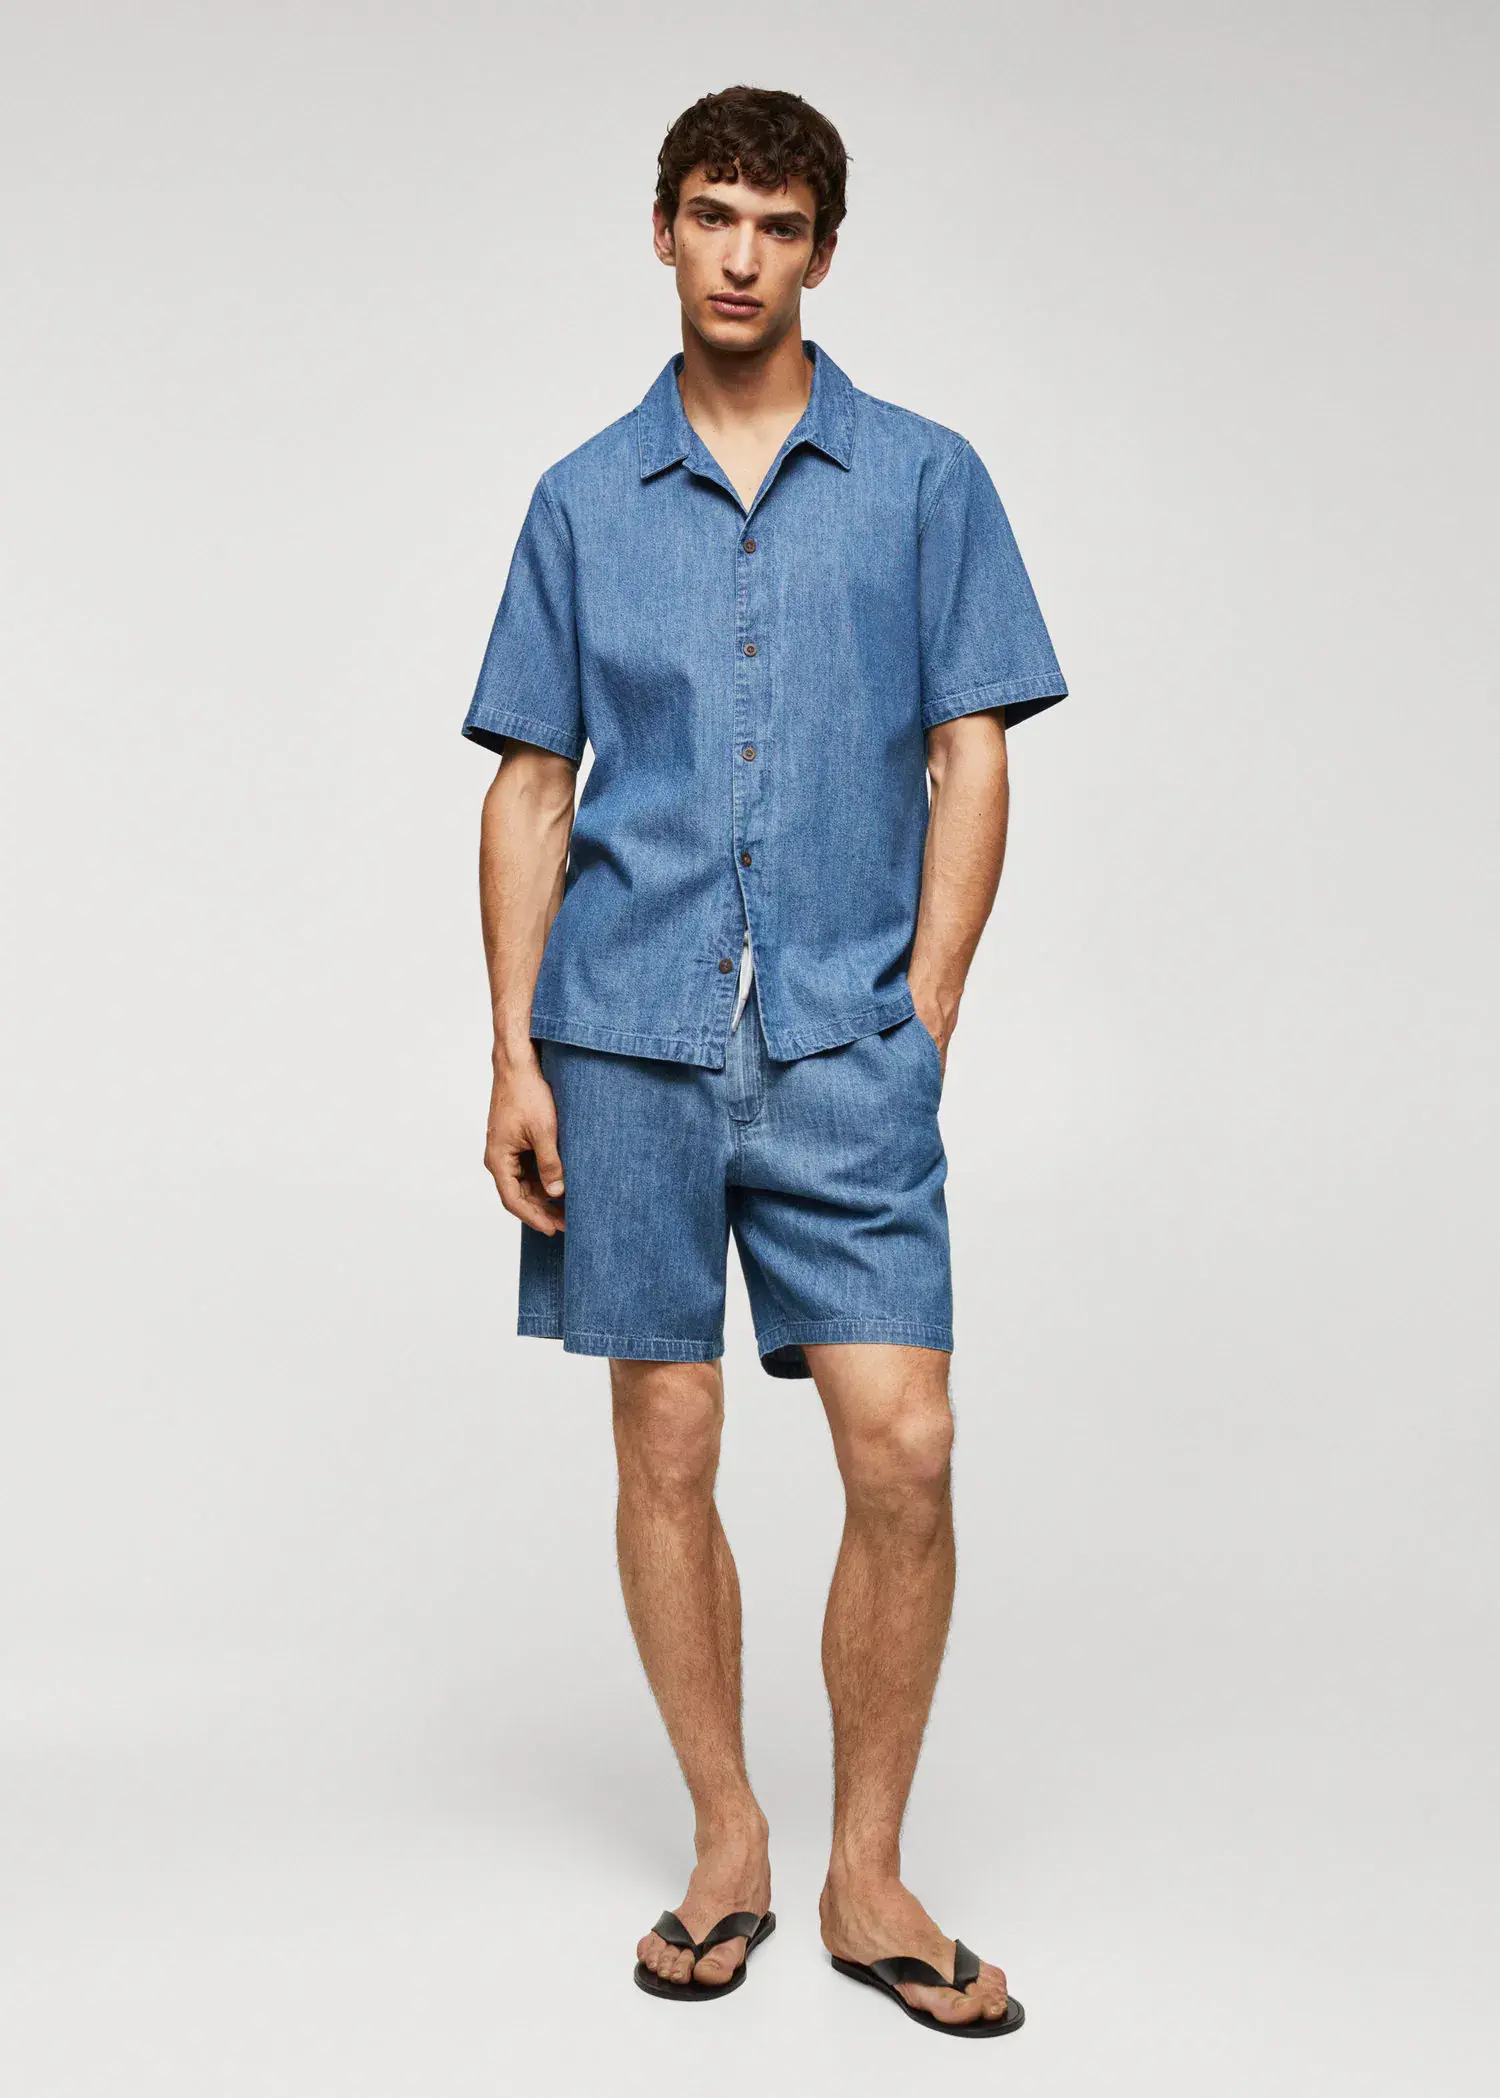 Mango 100% cotton chambray shirt. a man wearing a blue shirt and shorts. 